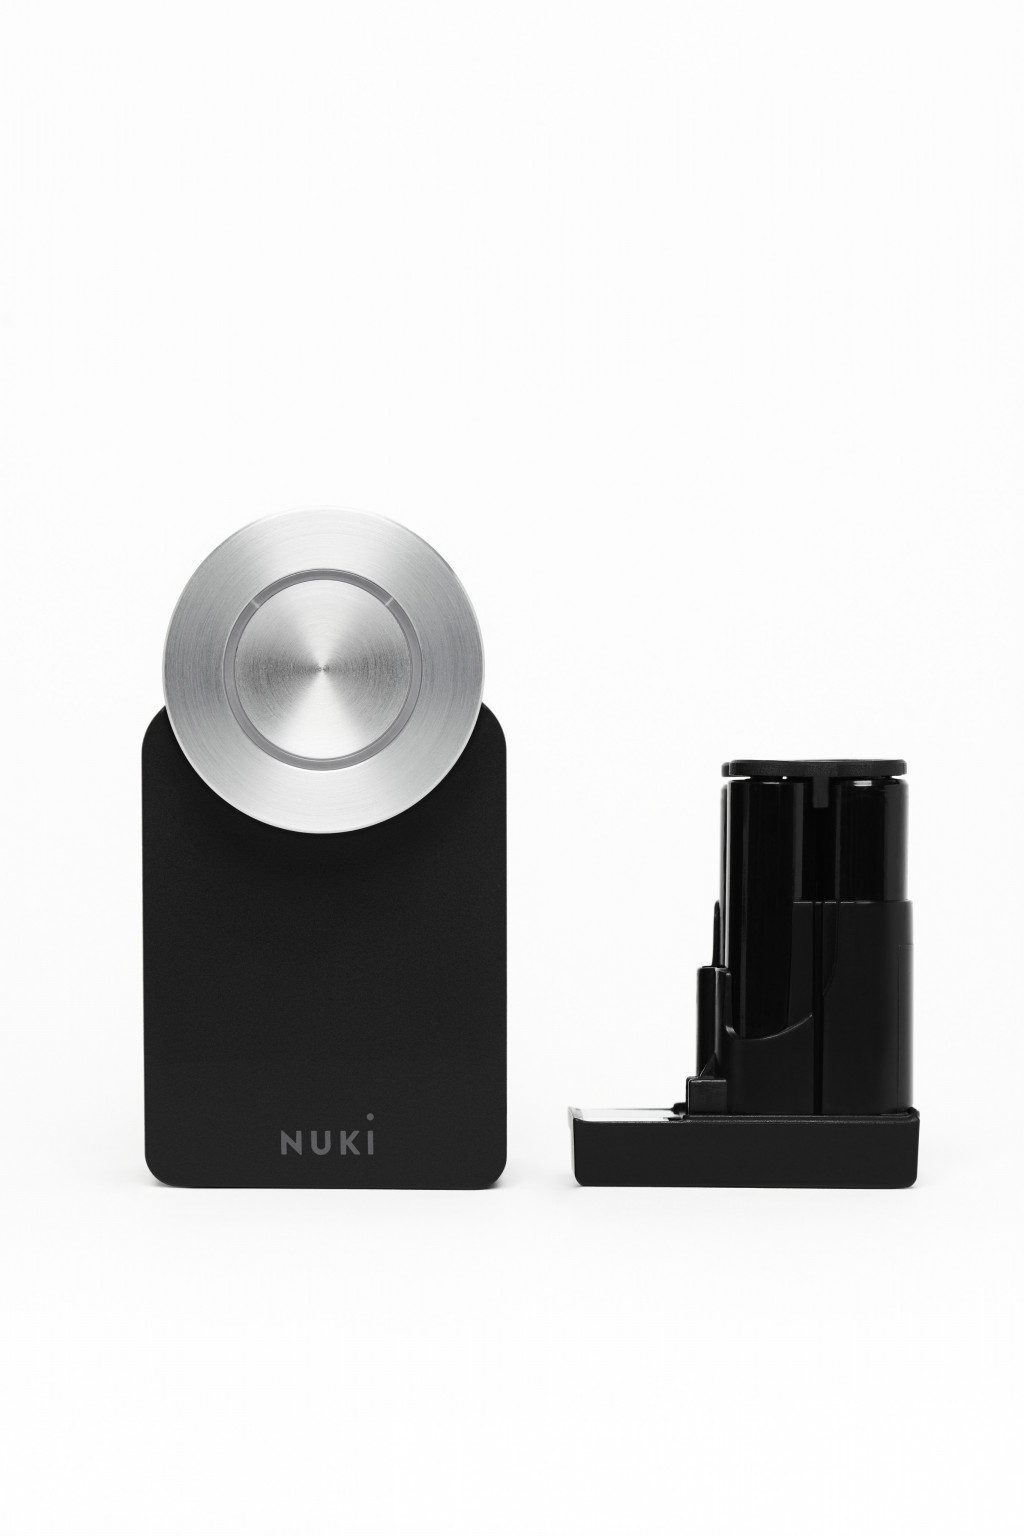 Nuki Smart Lock 4.0 Pro zwart met cilinderslot M&C Matrix SKG**